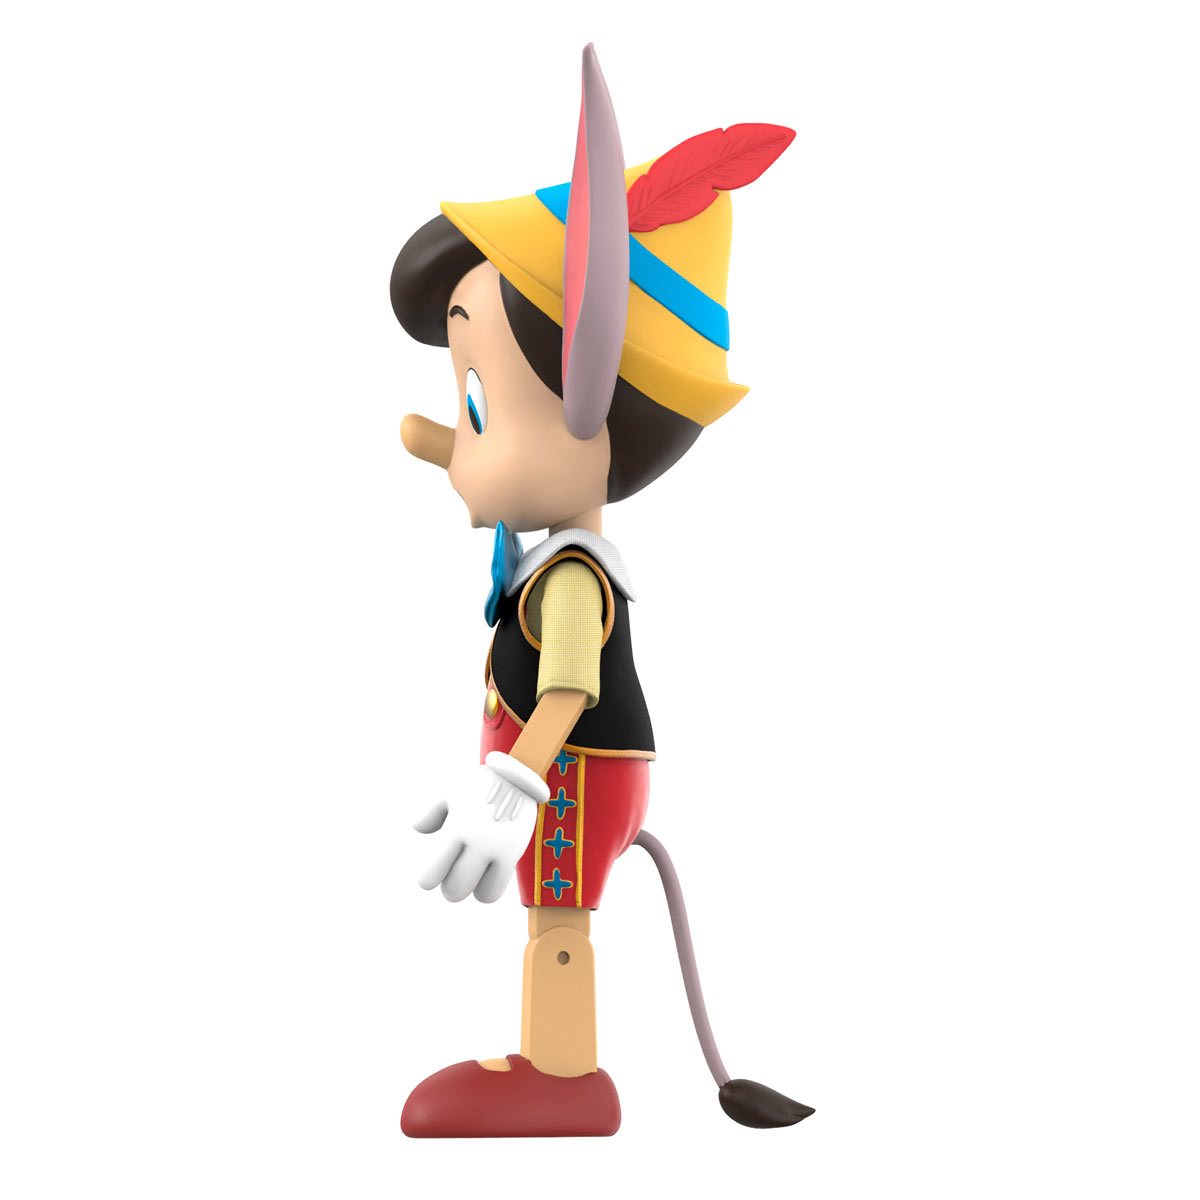 Disney Supersize Pinocchio Vinyl Figure - Entertainment Earth